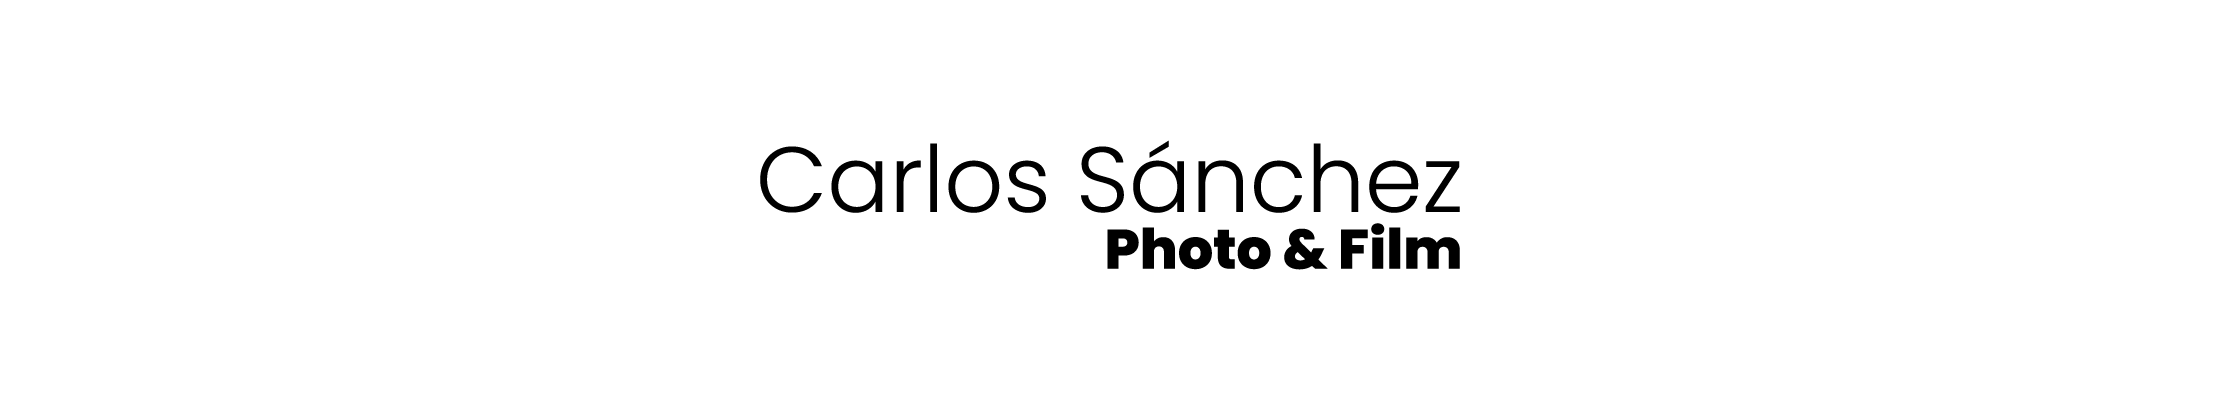 Carlos Manuel Sanchez Vidal's profile banner